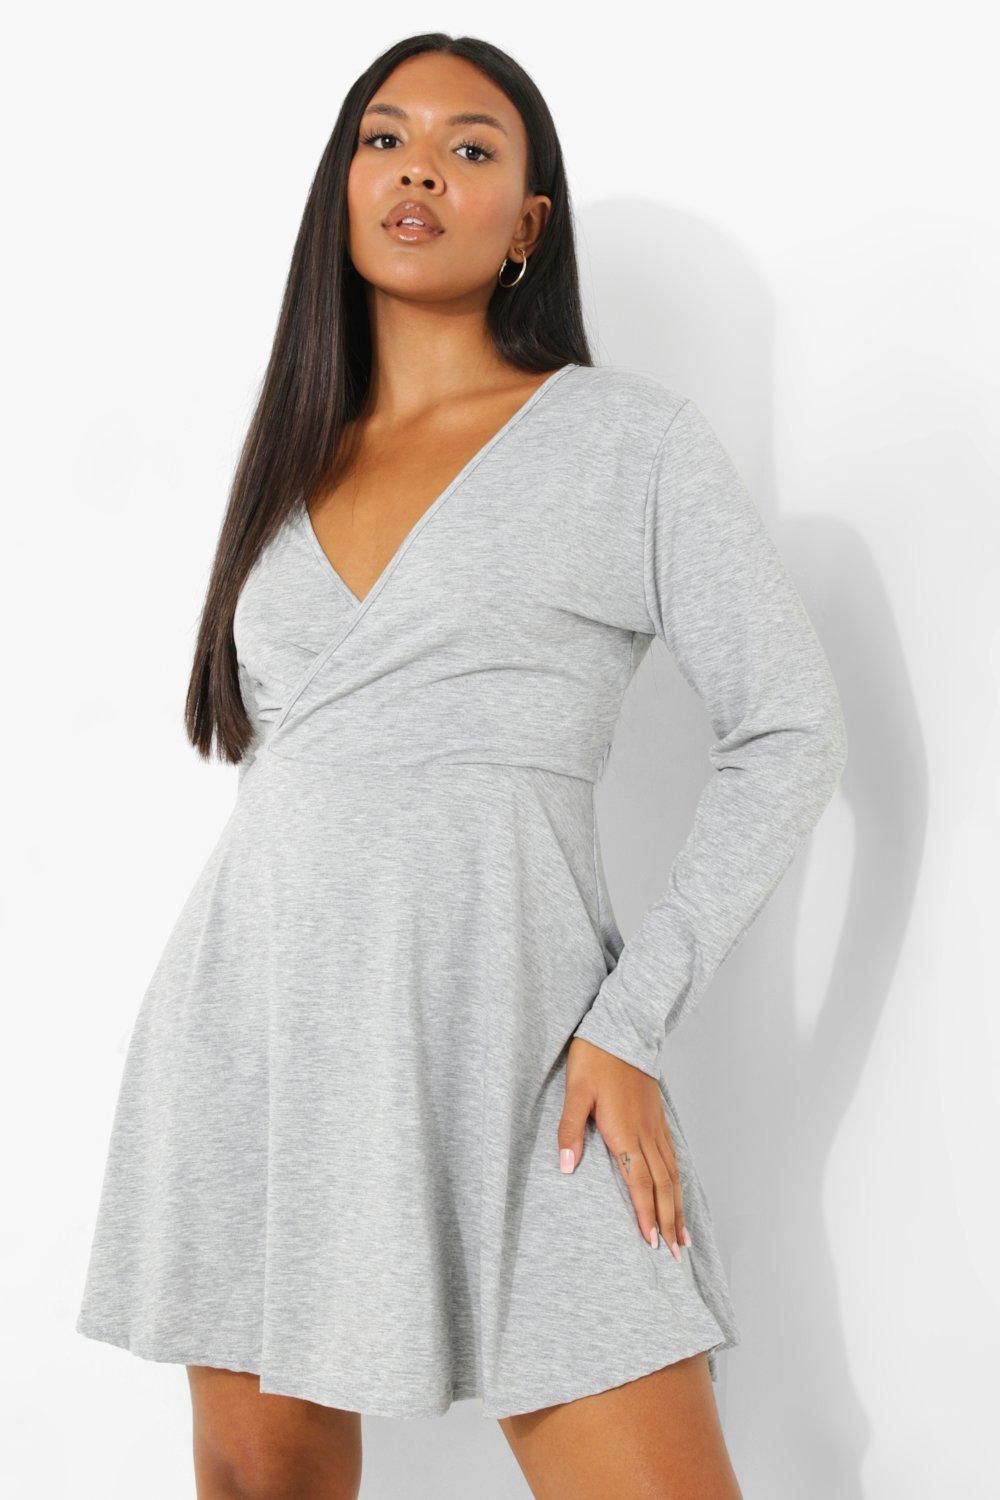 Stretch Jersey Knit Dress Fabric - Marl Grey